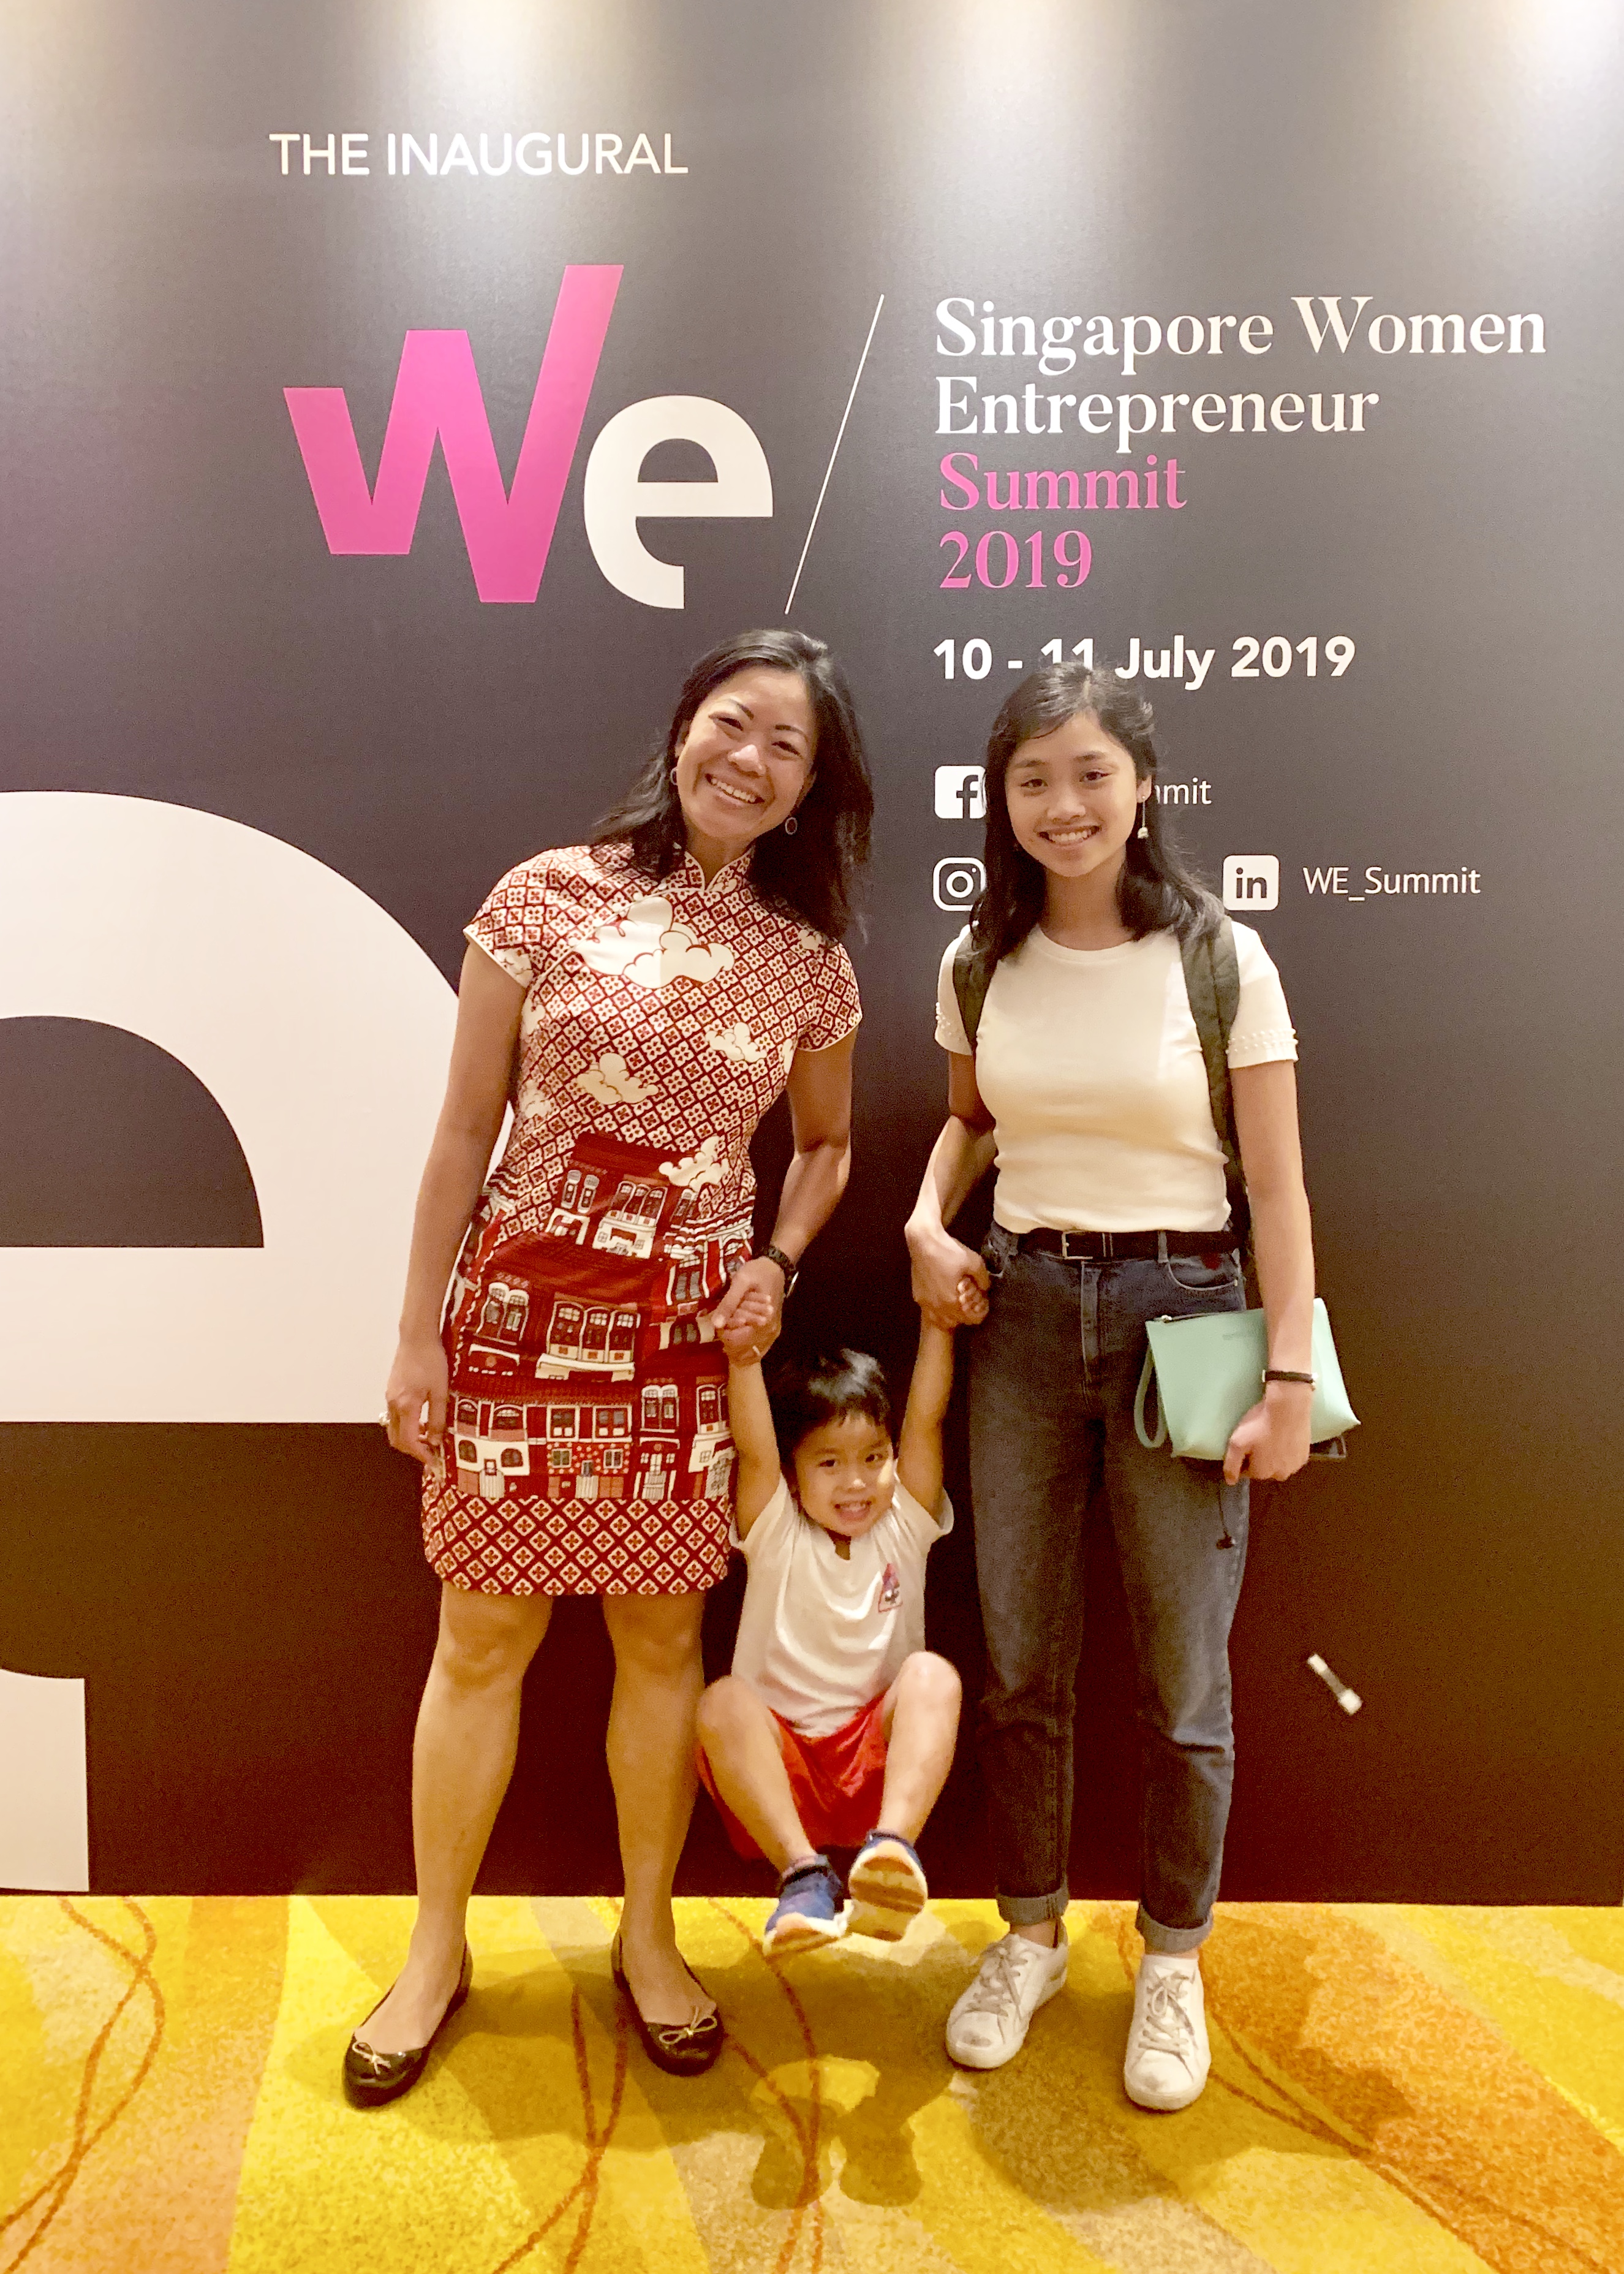 Day 1 of the Women Entrepreneur Summit